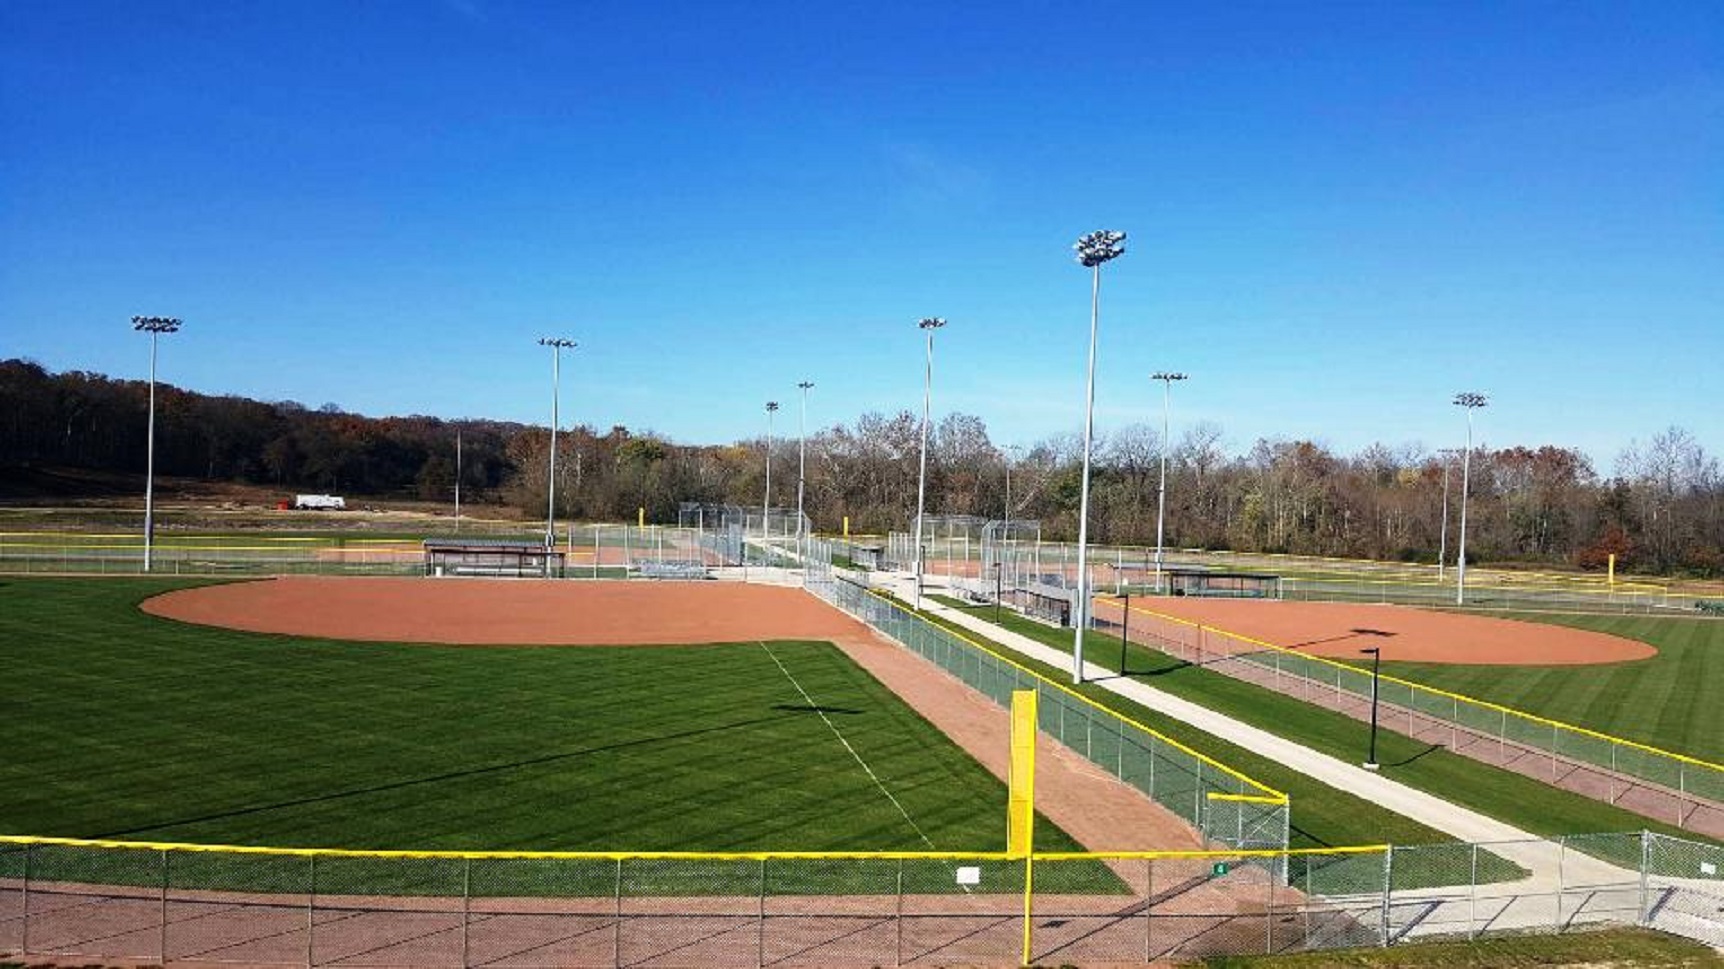 Commercial / Industrial Chain Link Fencing - Peruque Valley Park - Wentzville, Missouri - Baseball Fields